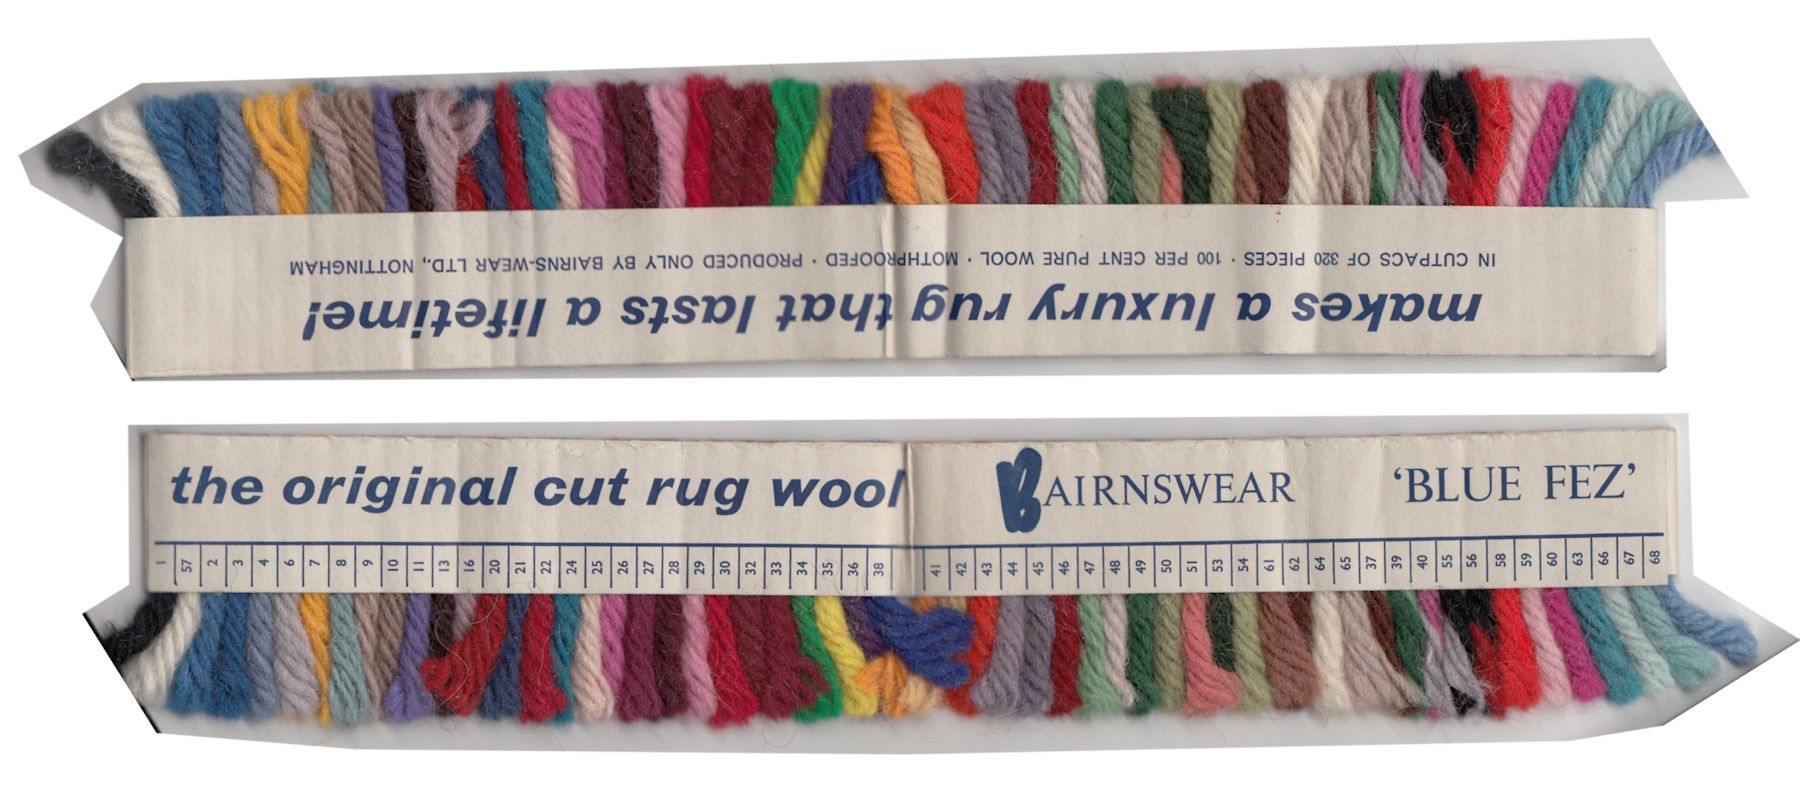 bairnswear rug wool